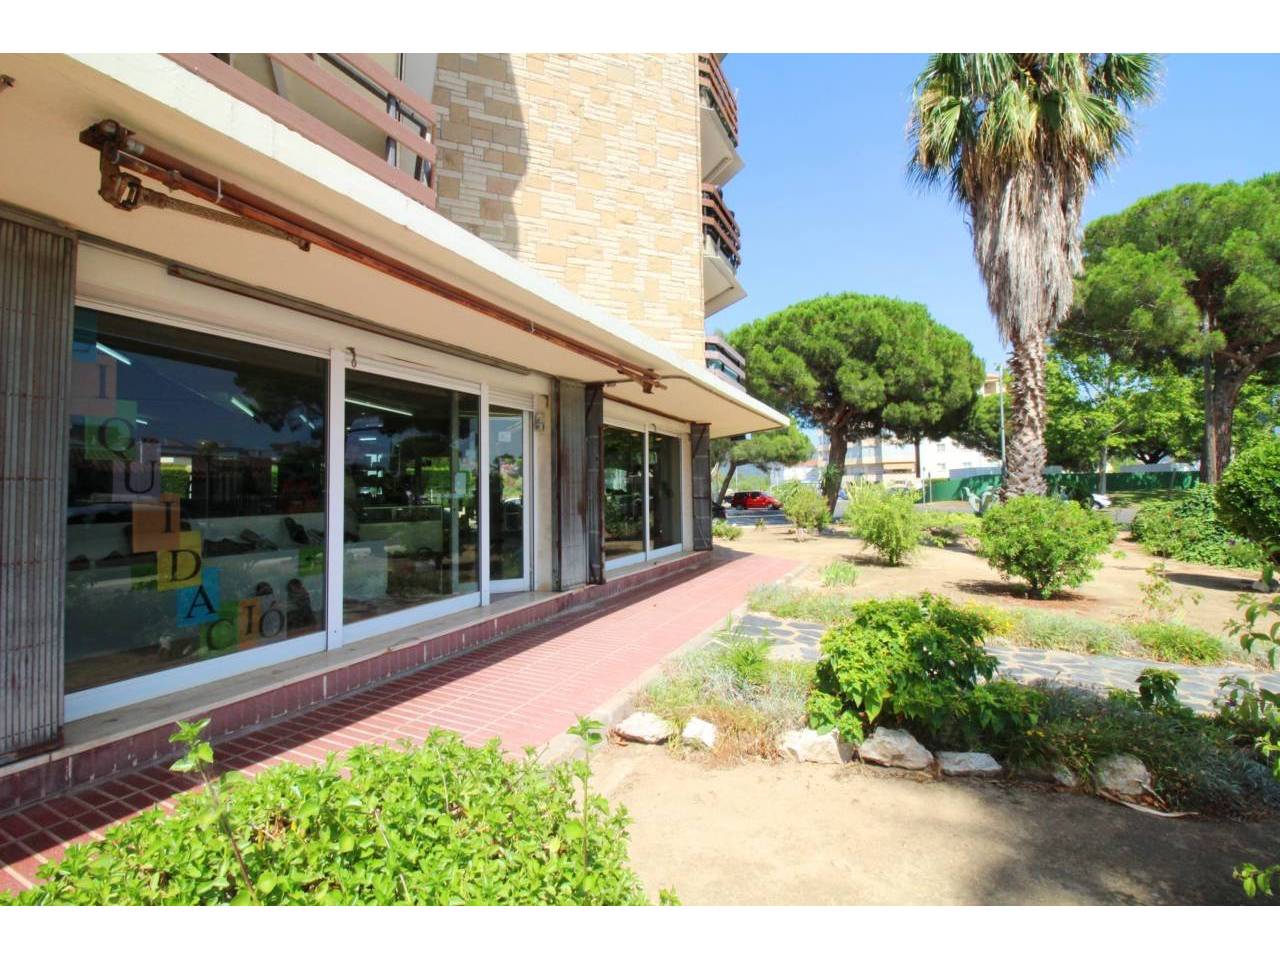 008701 - Commercial premises for rent in Santa Margarita 